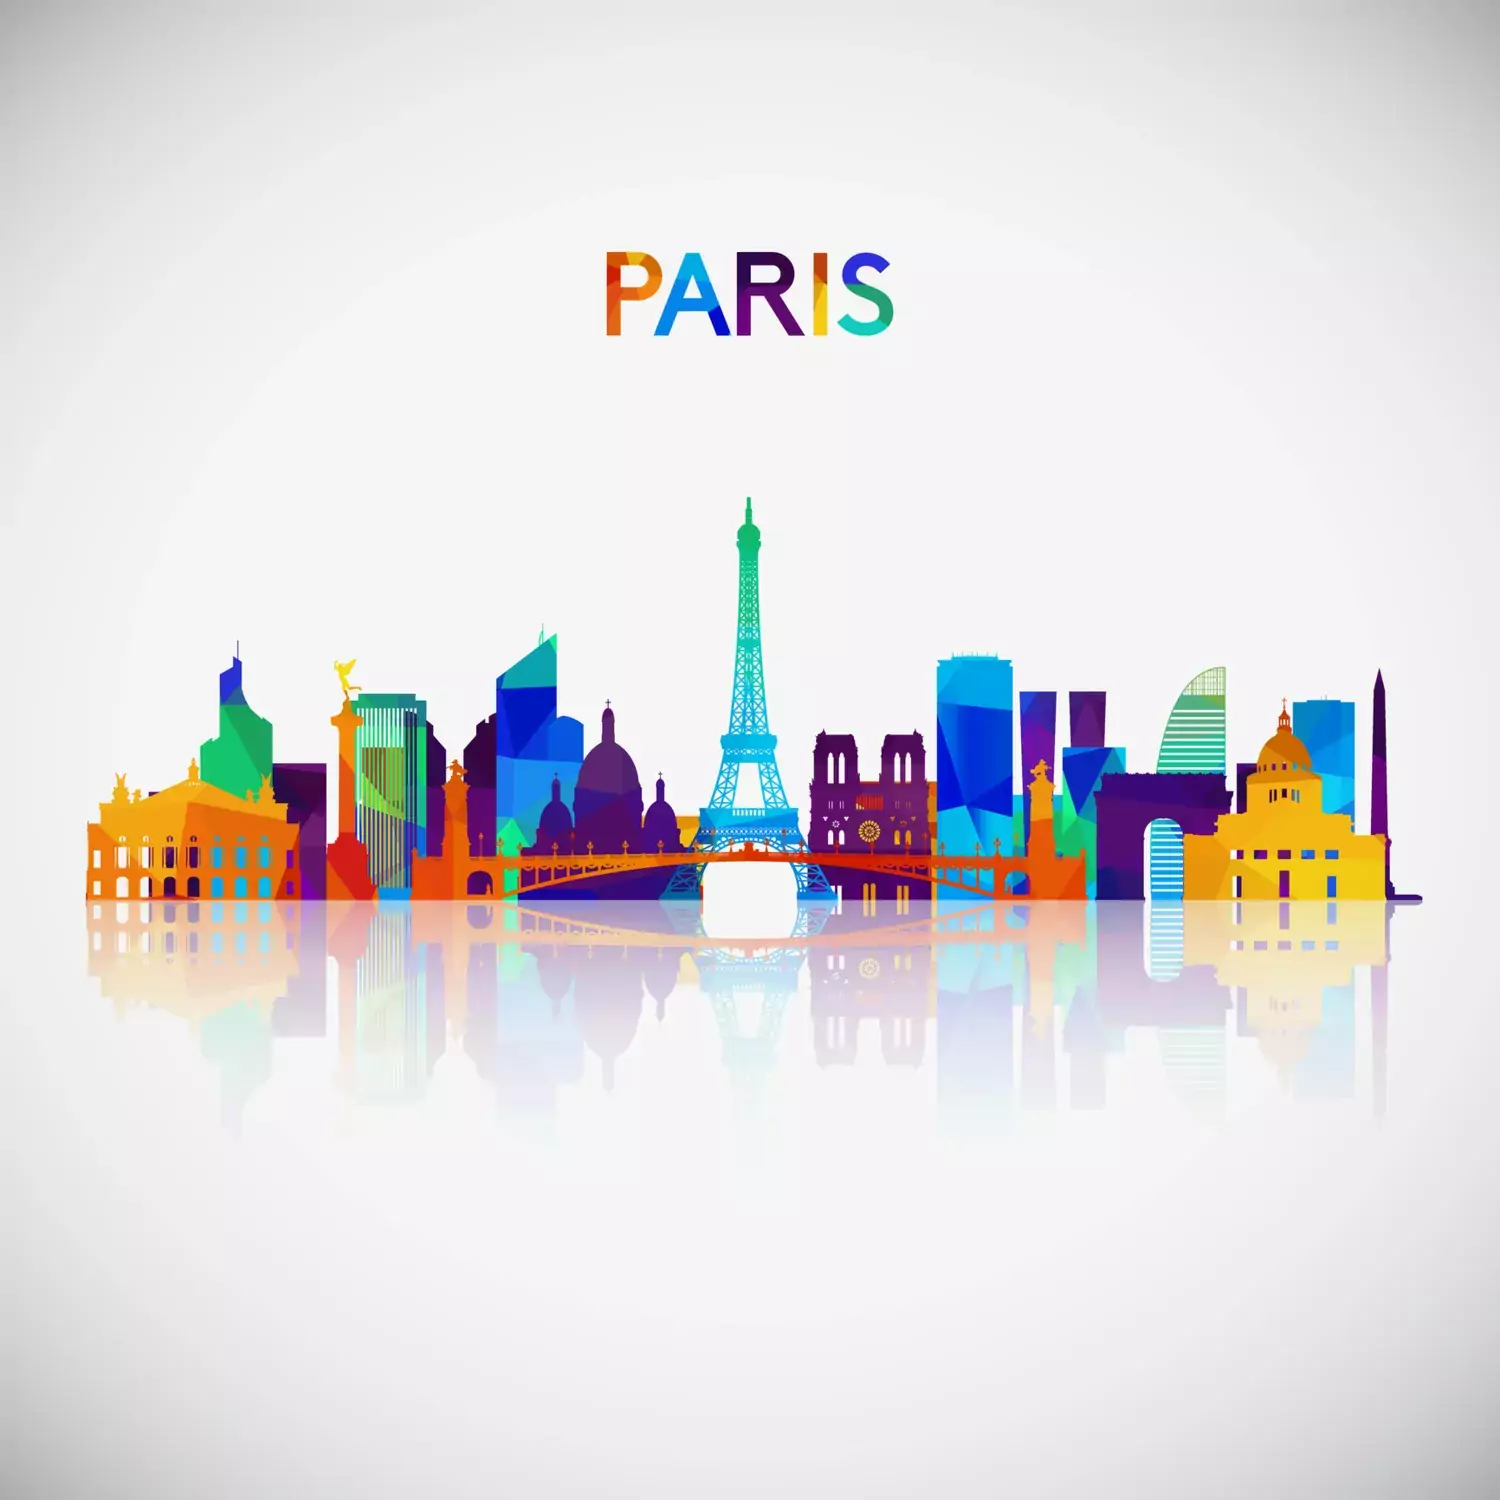 Illustration of Paris' landmarks.